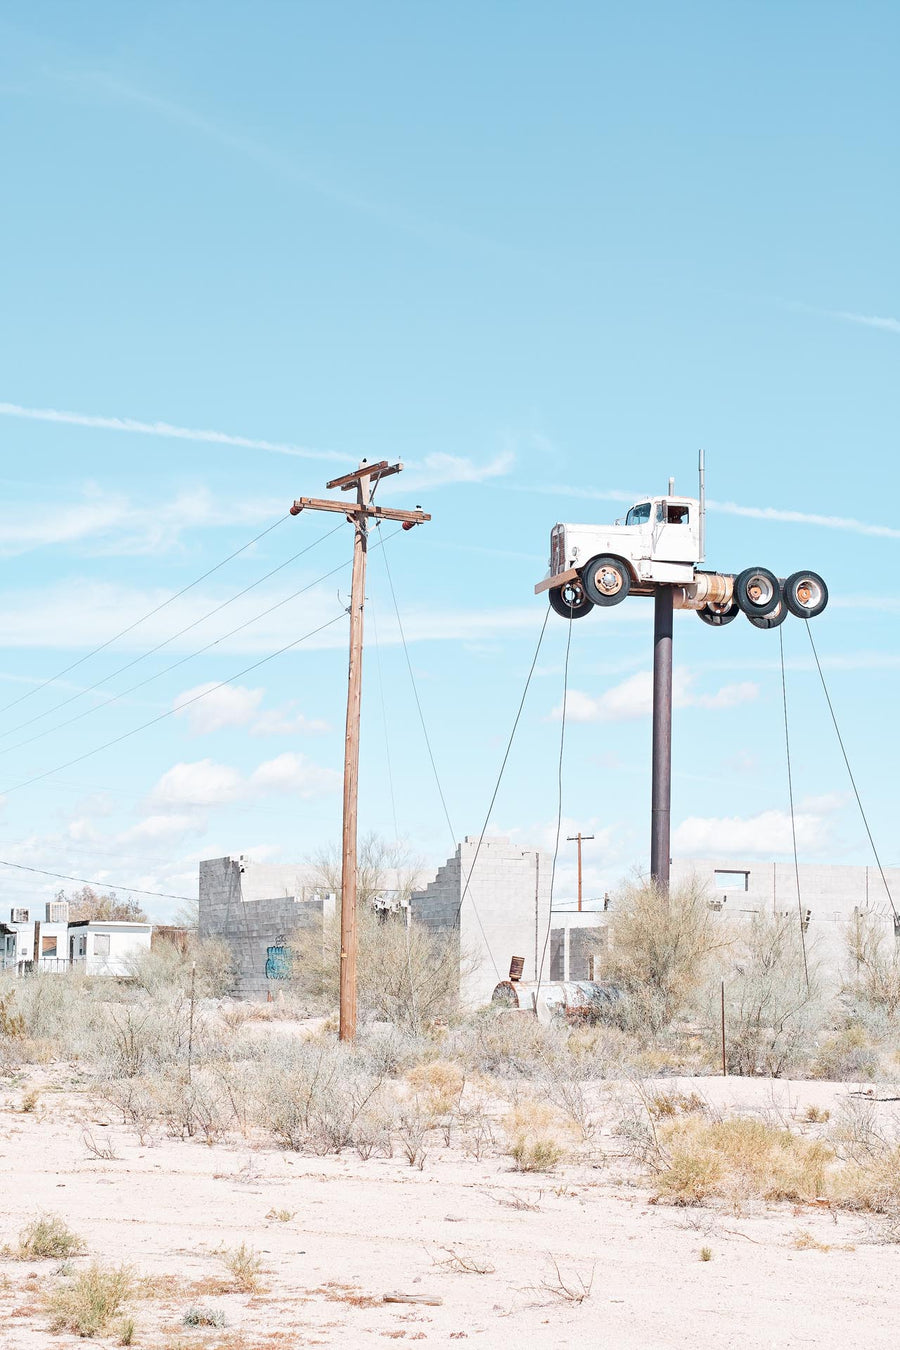 Truck on a stick, California, USA  LTD | Christian Fletcher Photo Images | Landscape Photography Australia